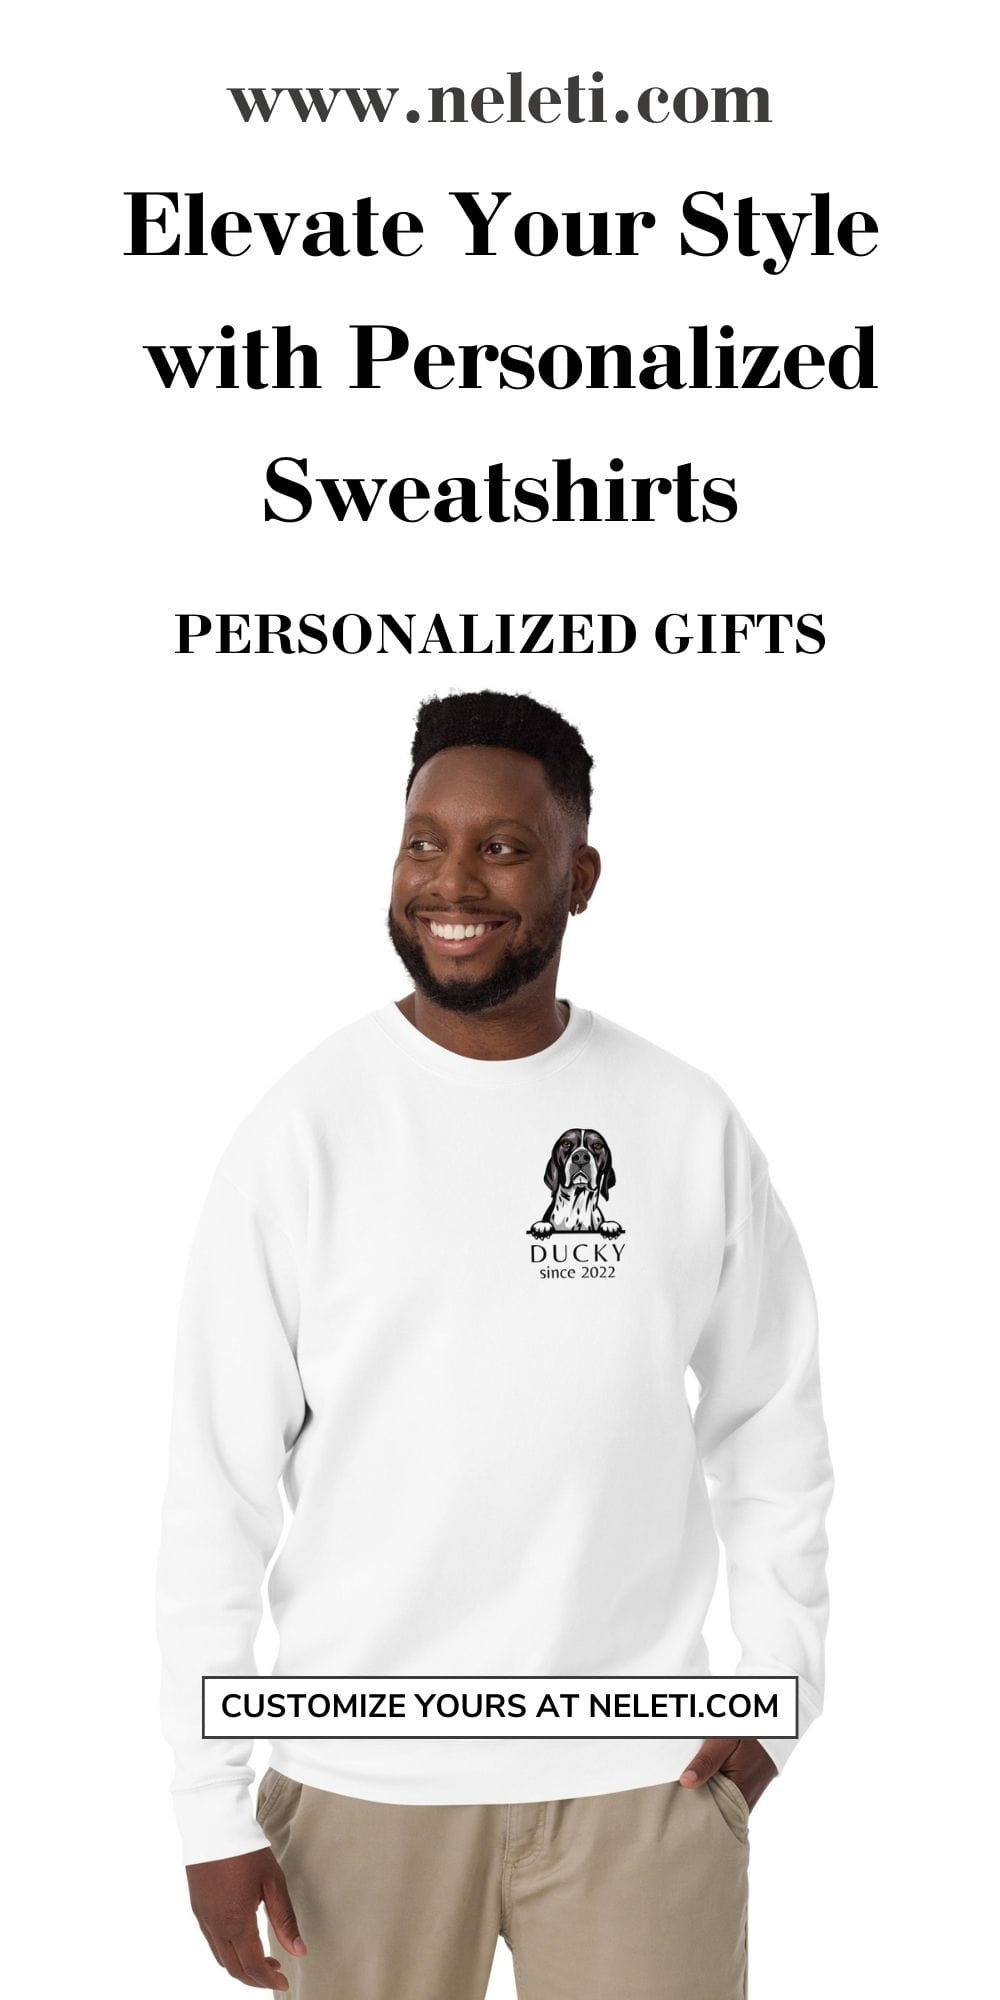 neleti.com-personalized-gift